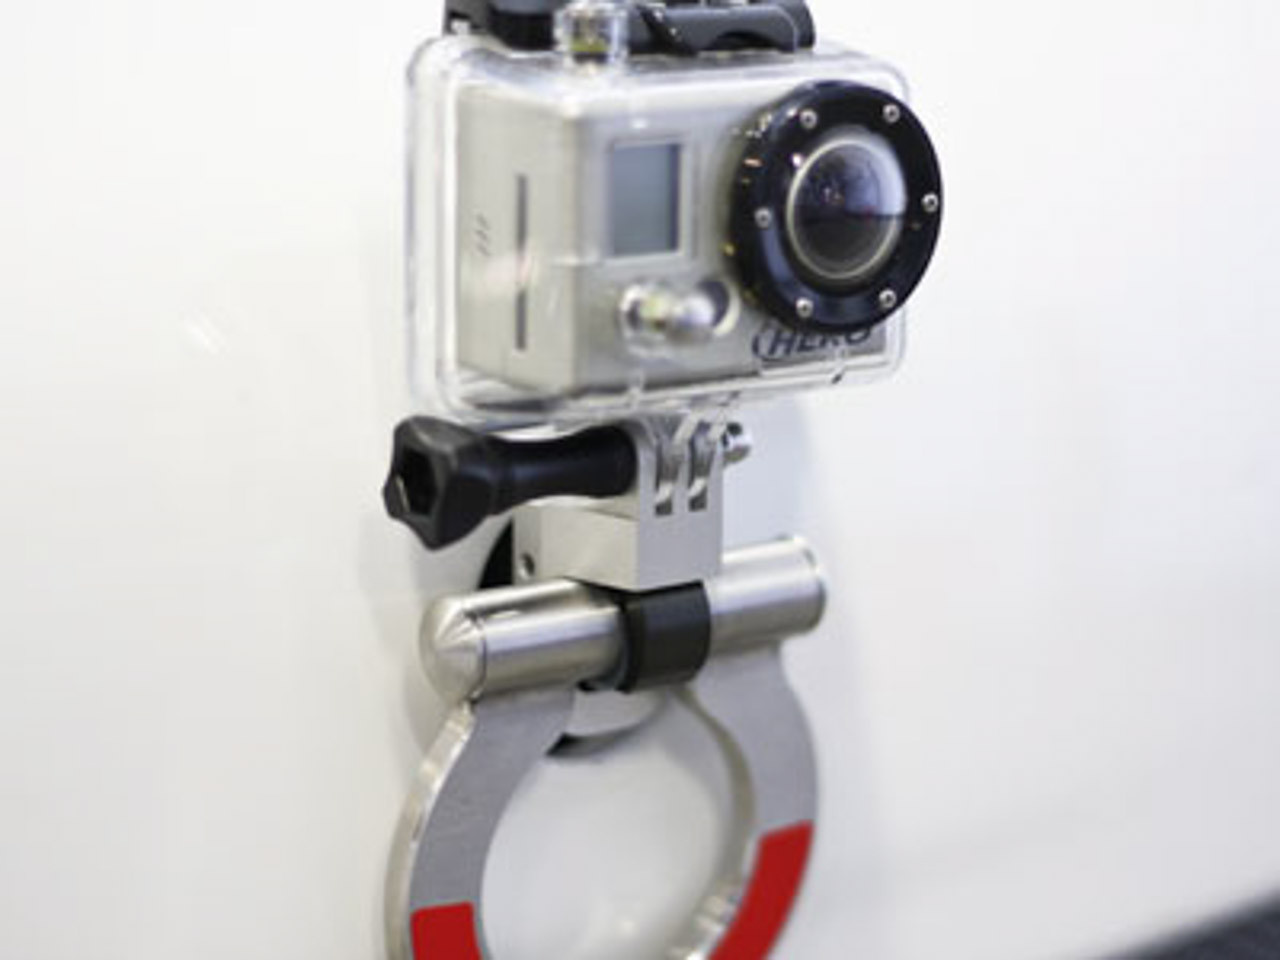 The ultimate camera mount on a Porsche Panamera